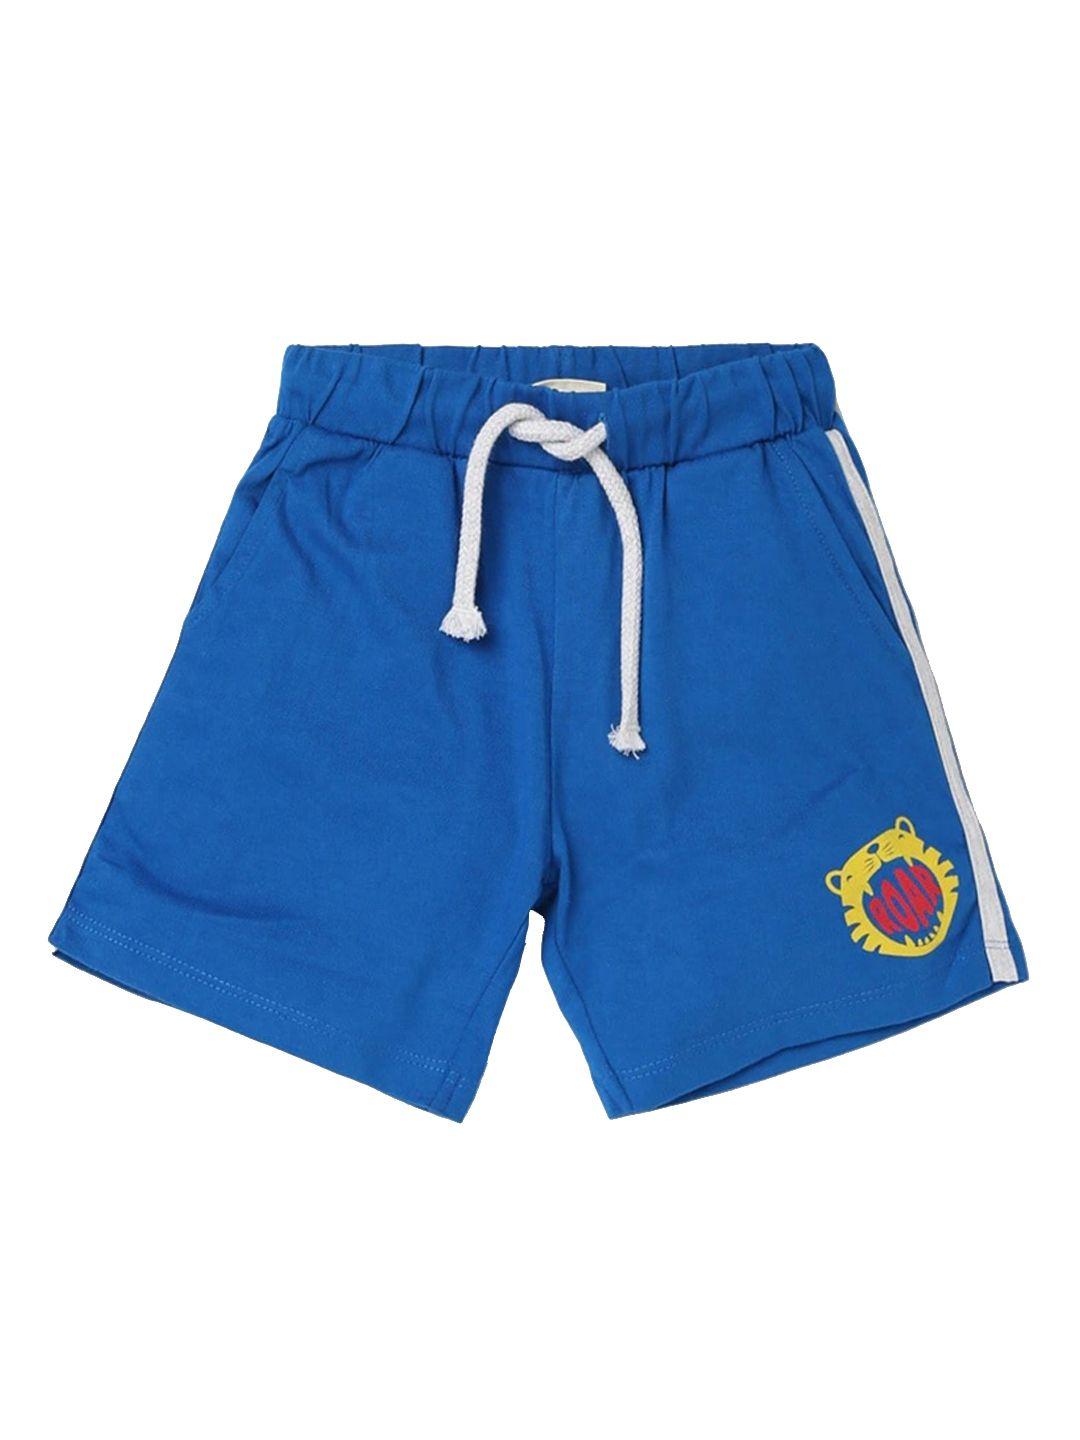 juscubs boys blue outdoor shorts